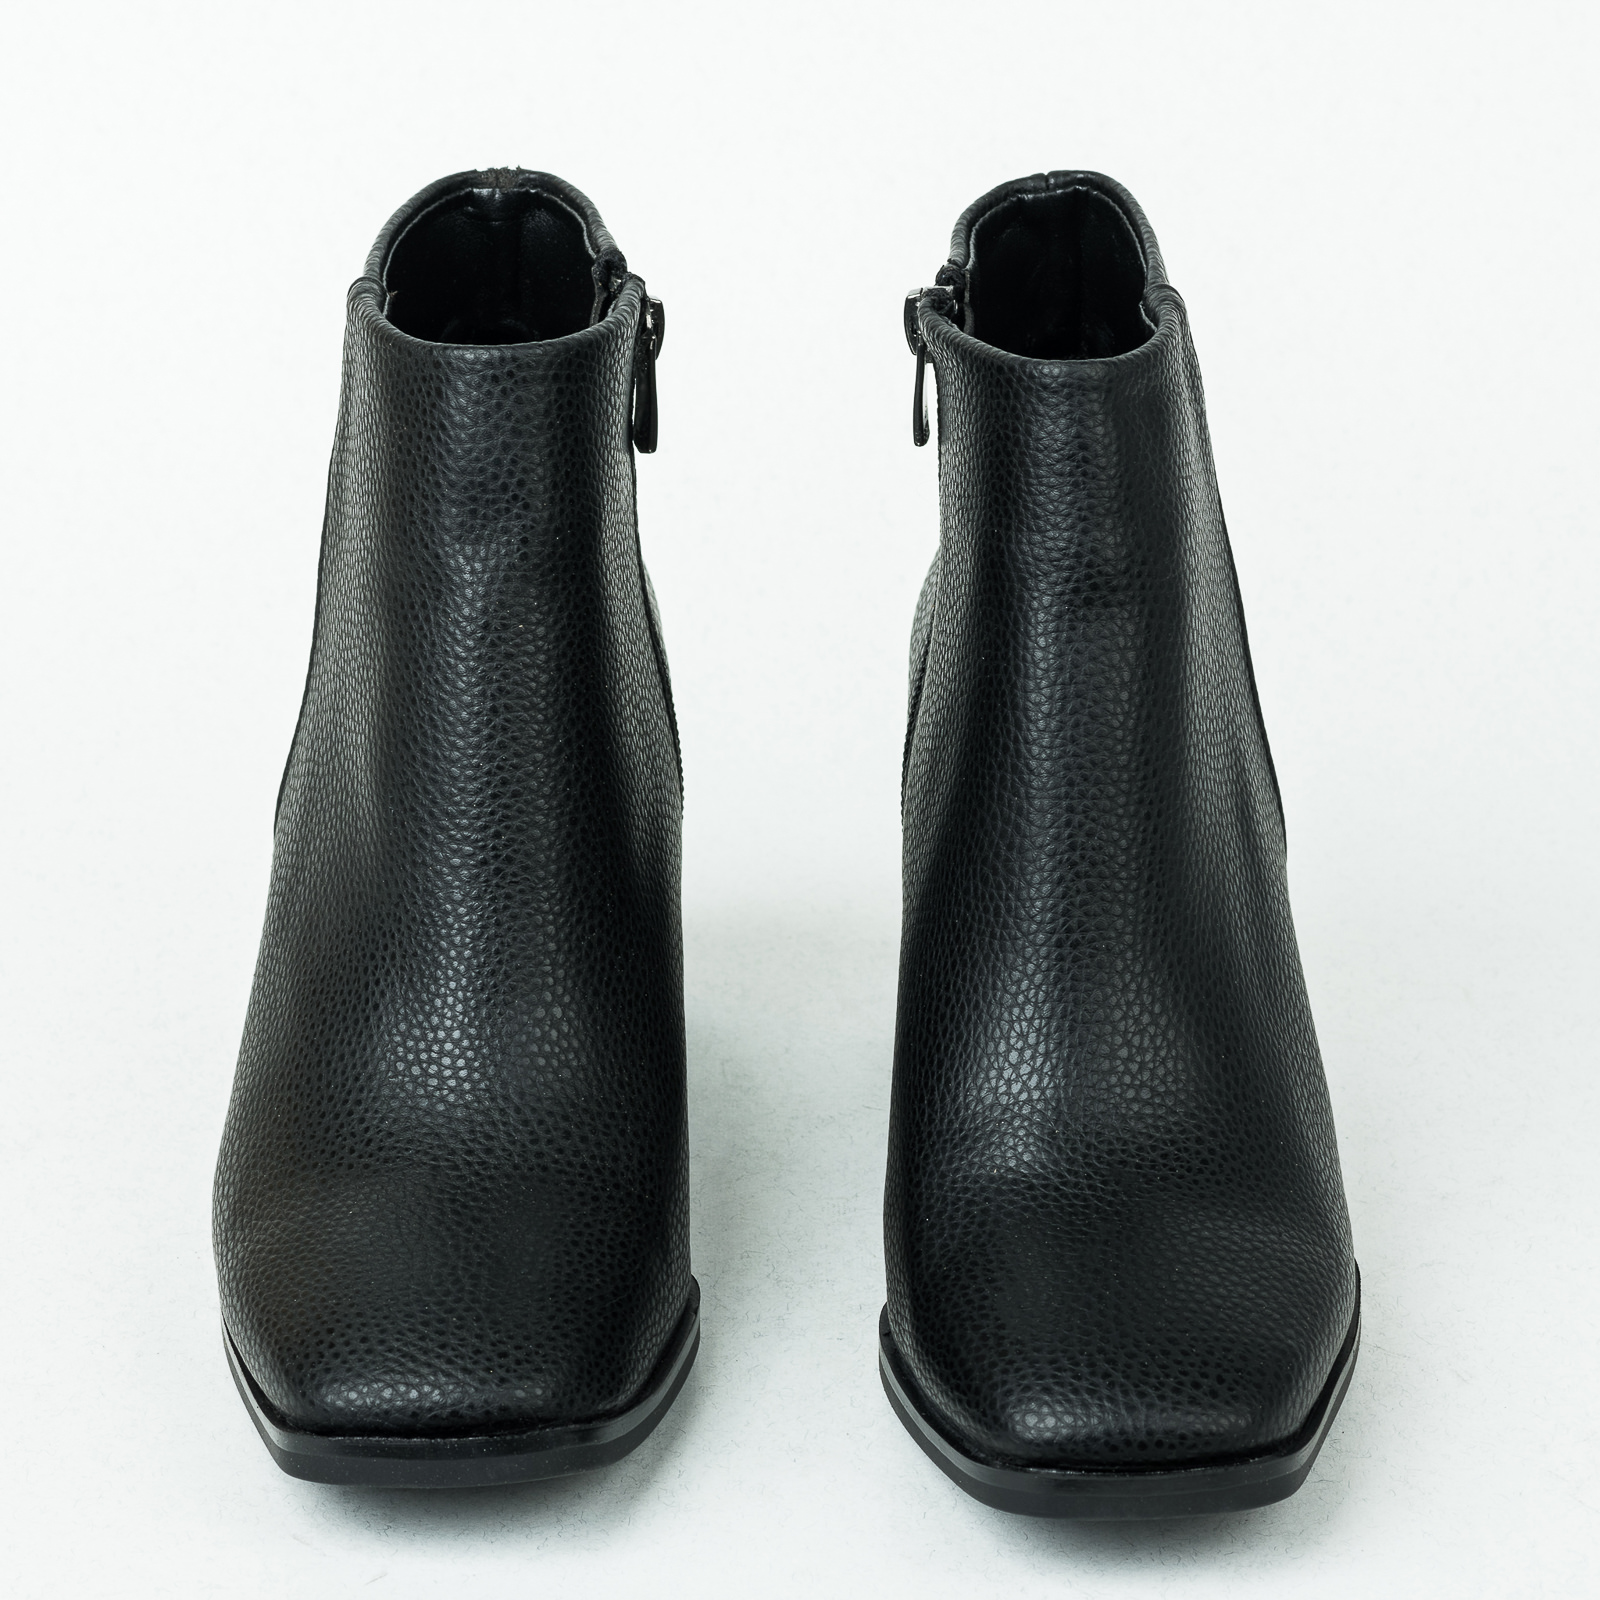 Women ankle boots B224 - BLACK